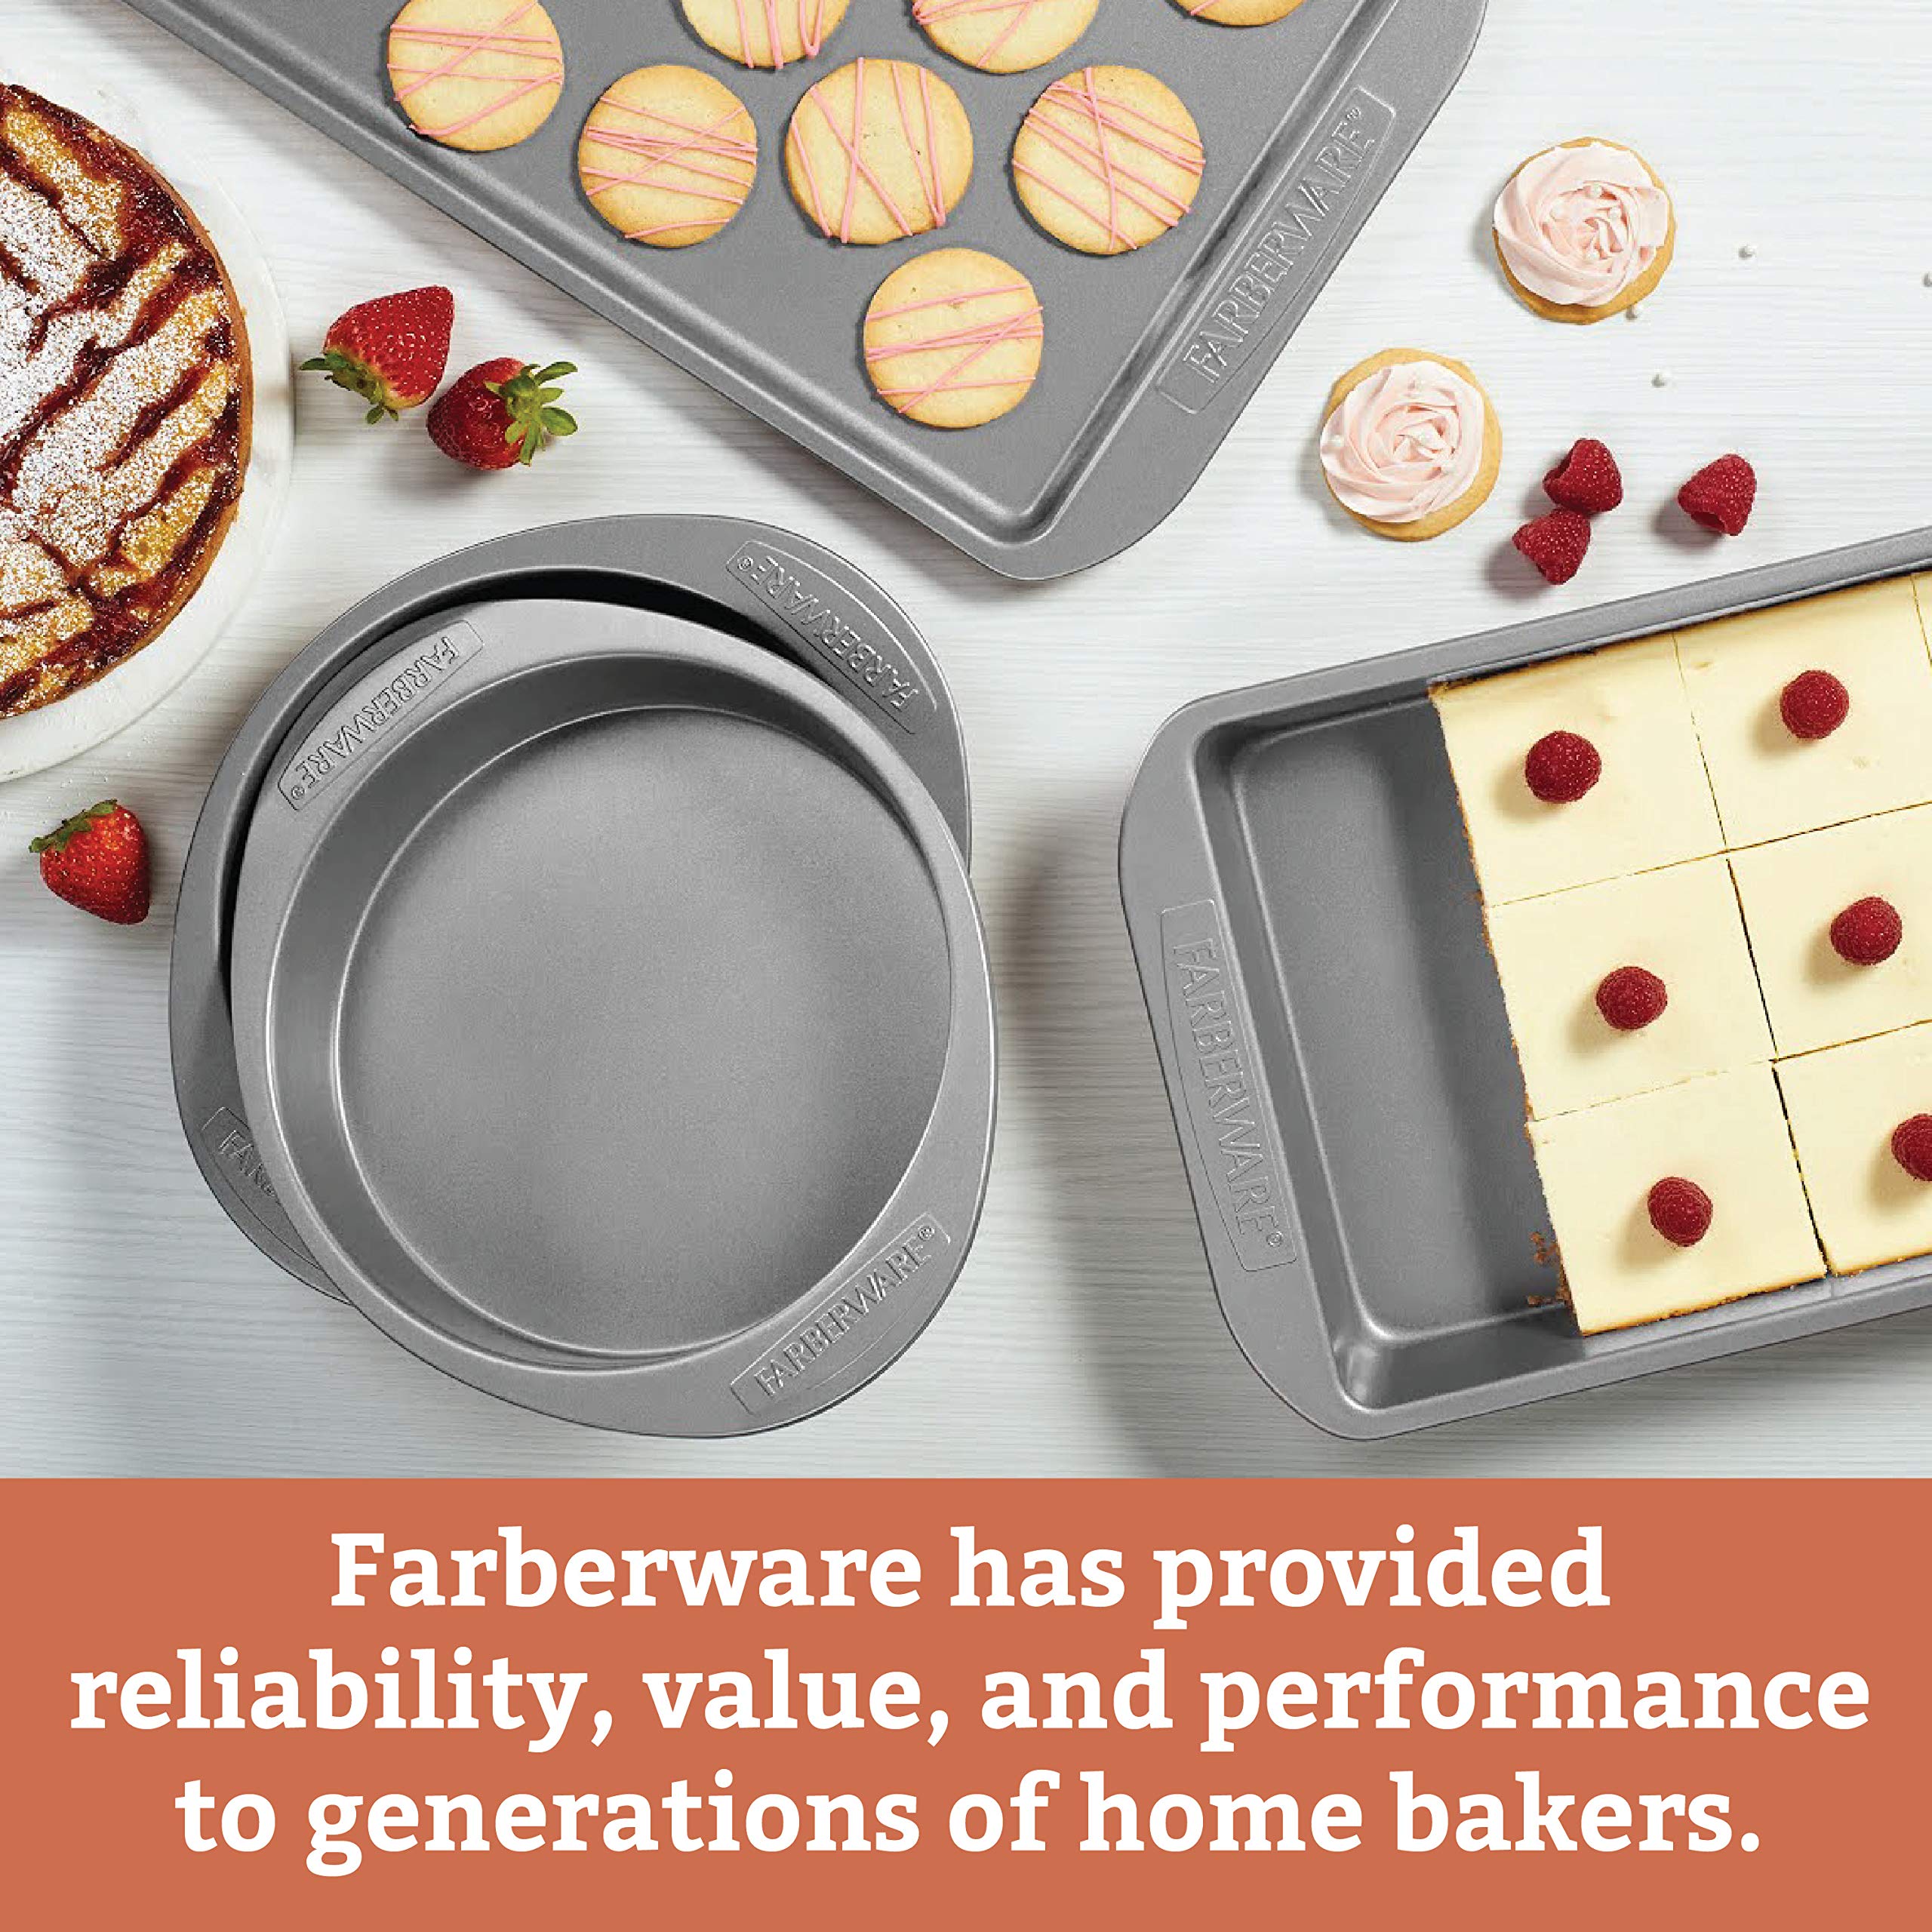 Farberware Nonstick Bakeware Springform Baking Pan / Nonstick Springform Cake Pan / Nonstick Cheesecake Pan, Round - 9 Inch, Gray